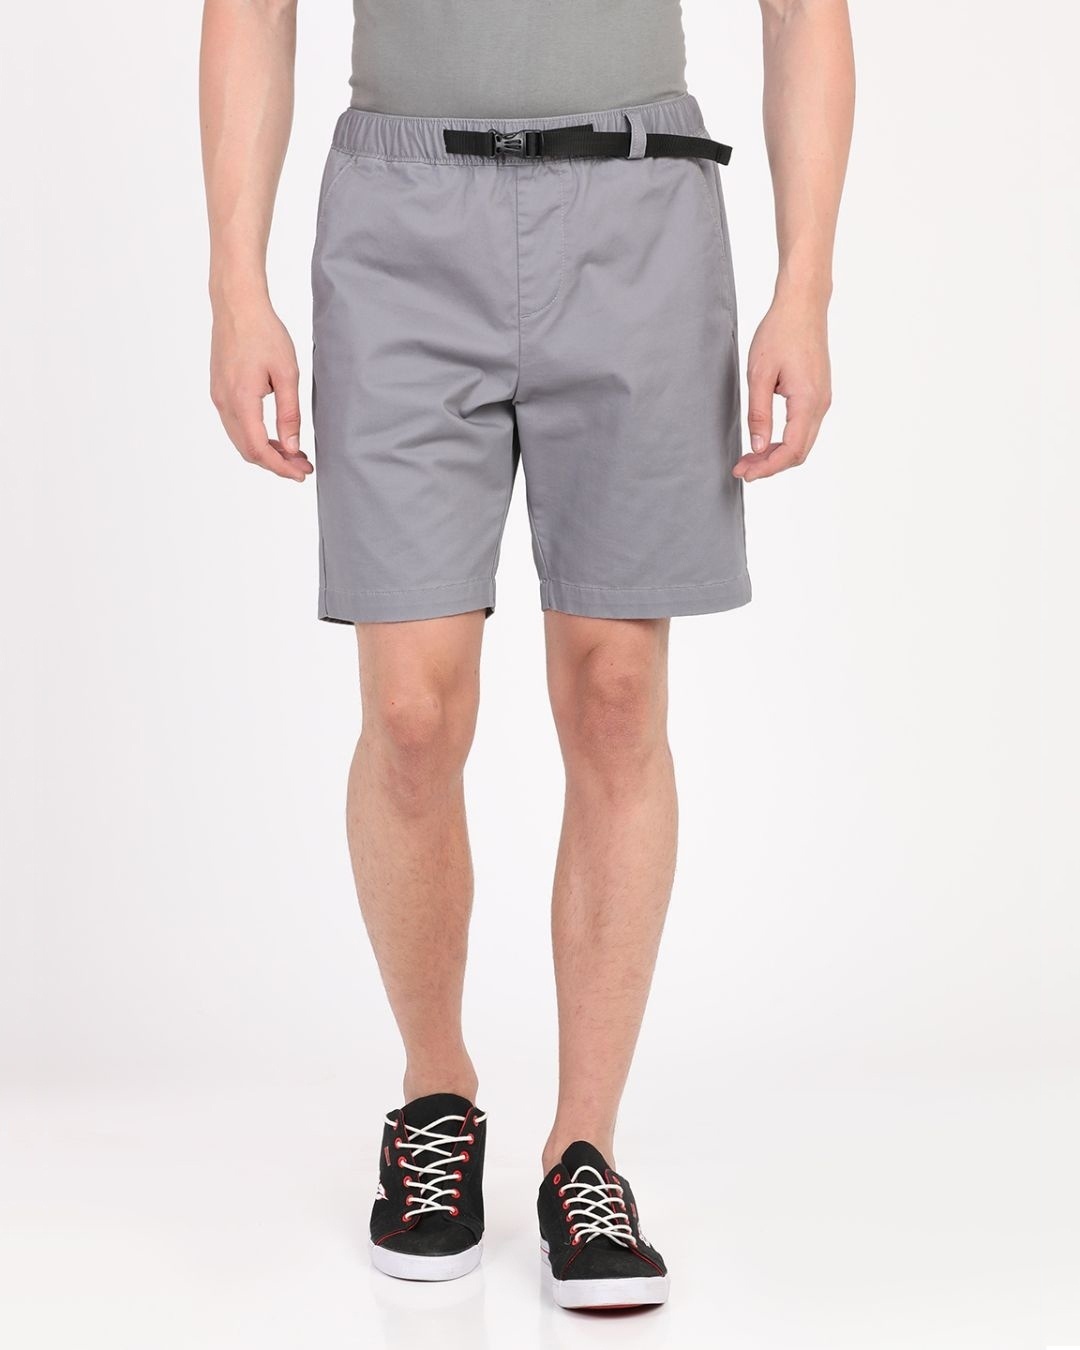 Buy Men's Grey Slim Fit Cotton Shorts for Men Grey Online at Bewakoof